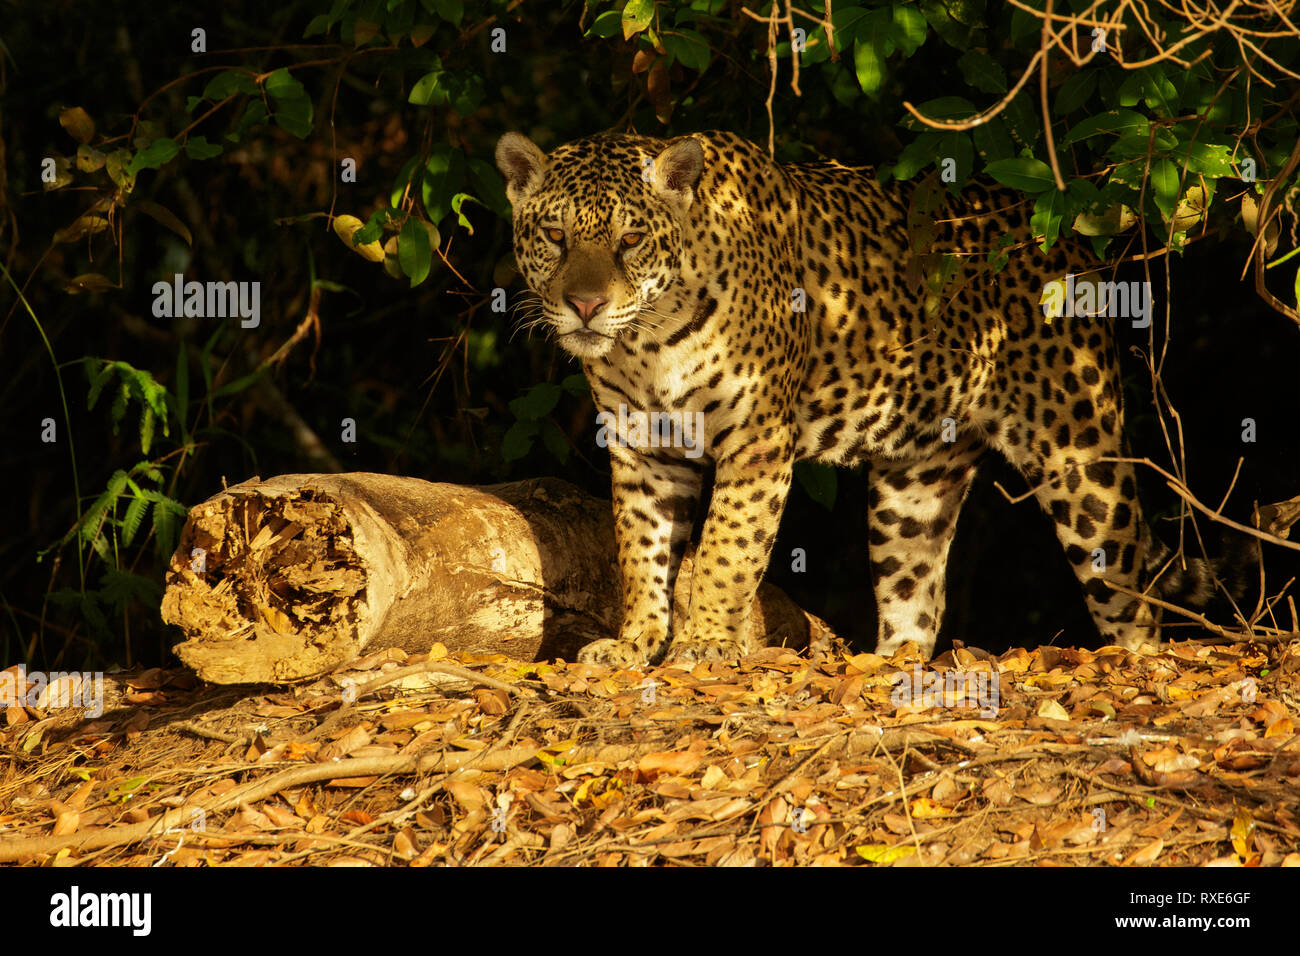 A Jaguar in the Pantalal region of Brazil. Stock Photo